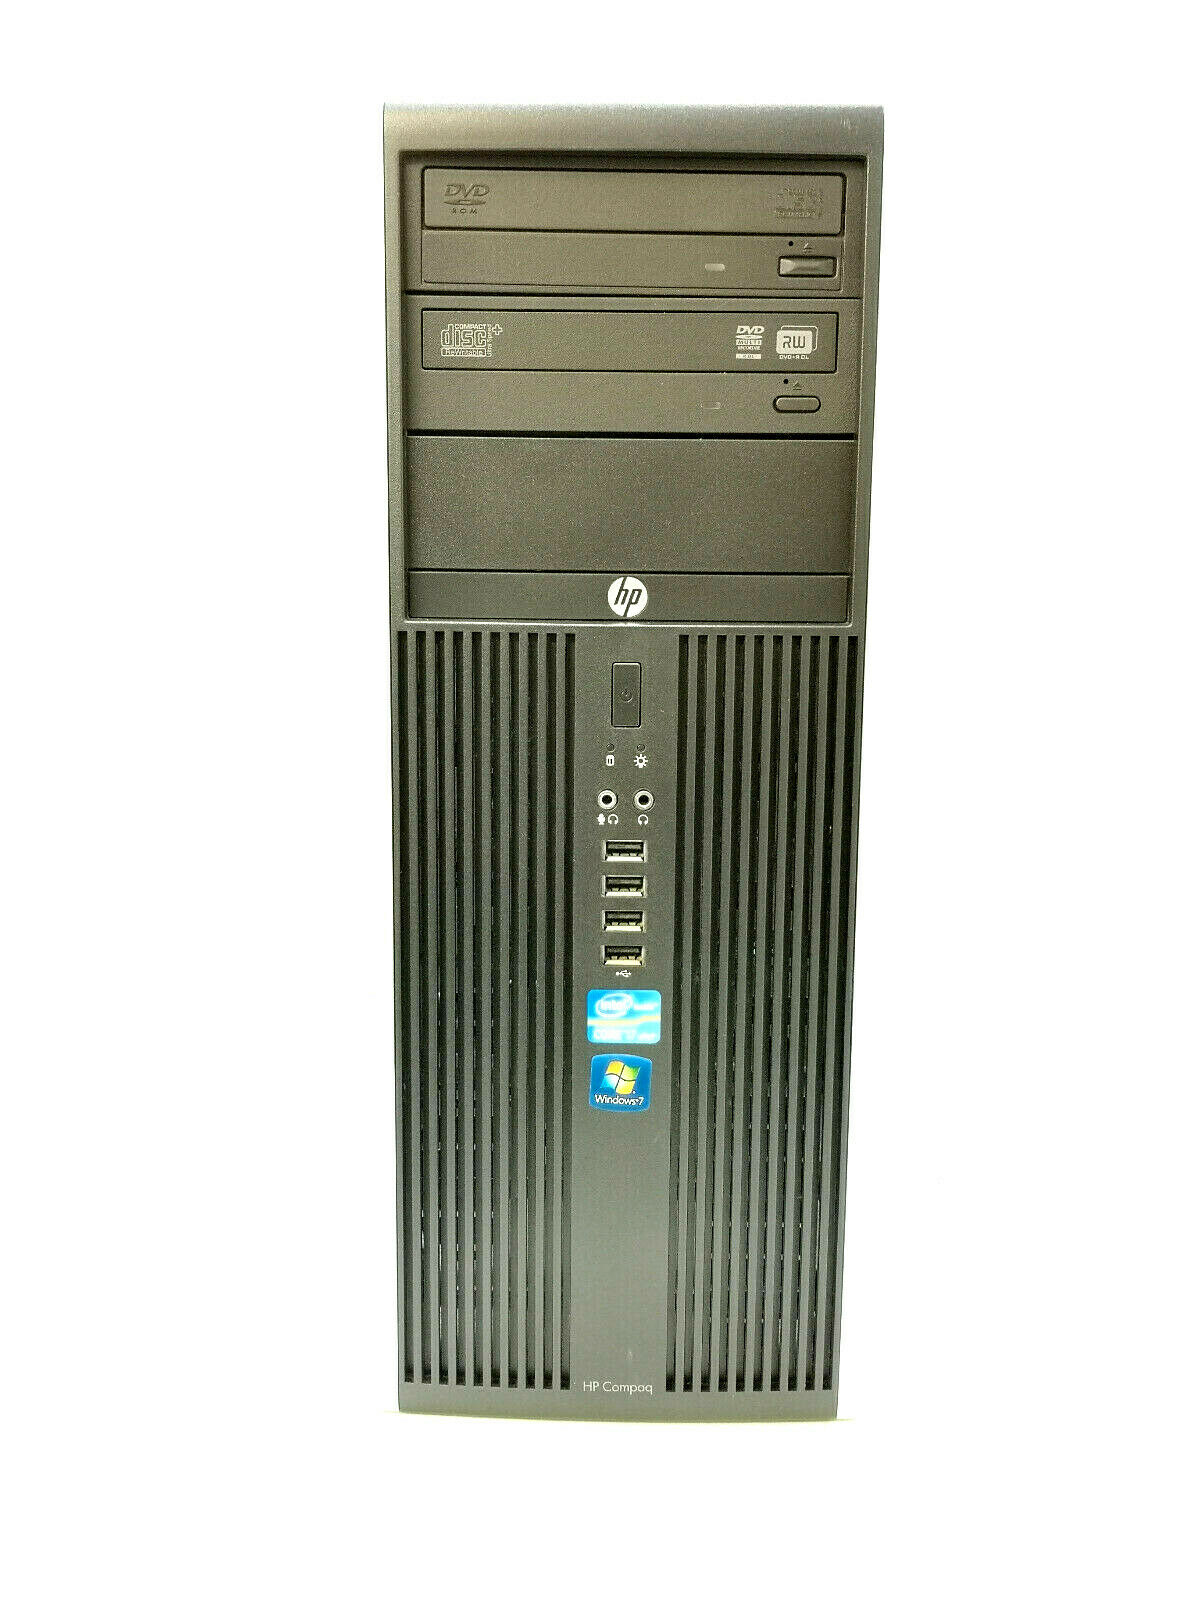 Refurbished HP 8200 Elite Desktop Tower PC